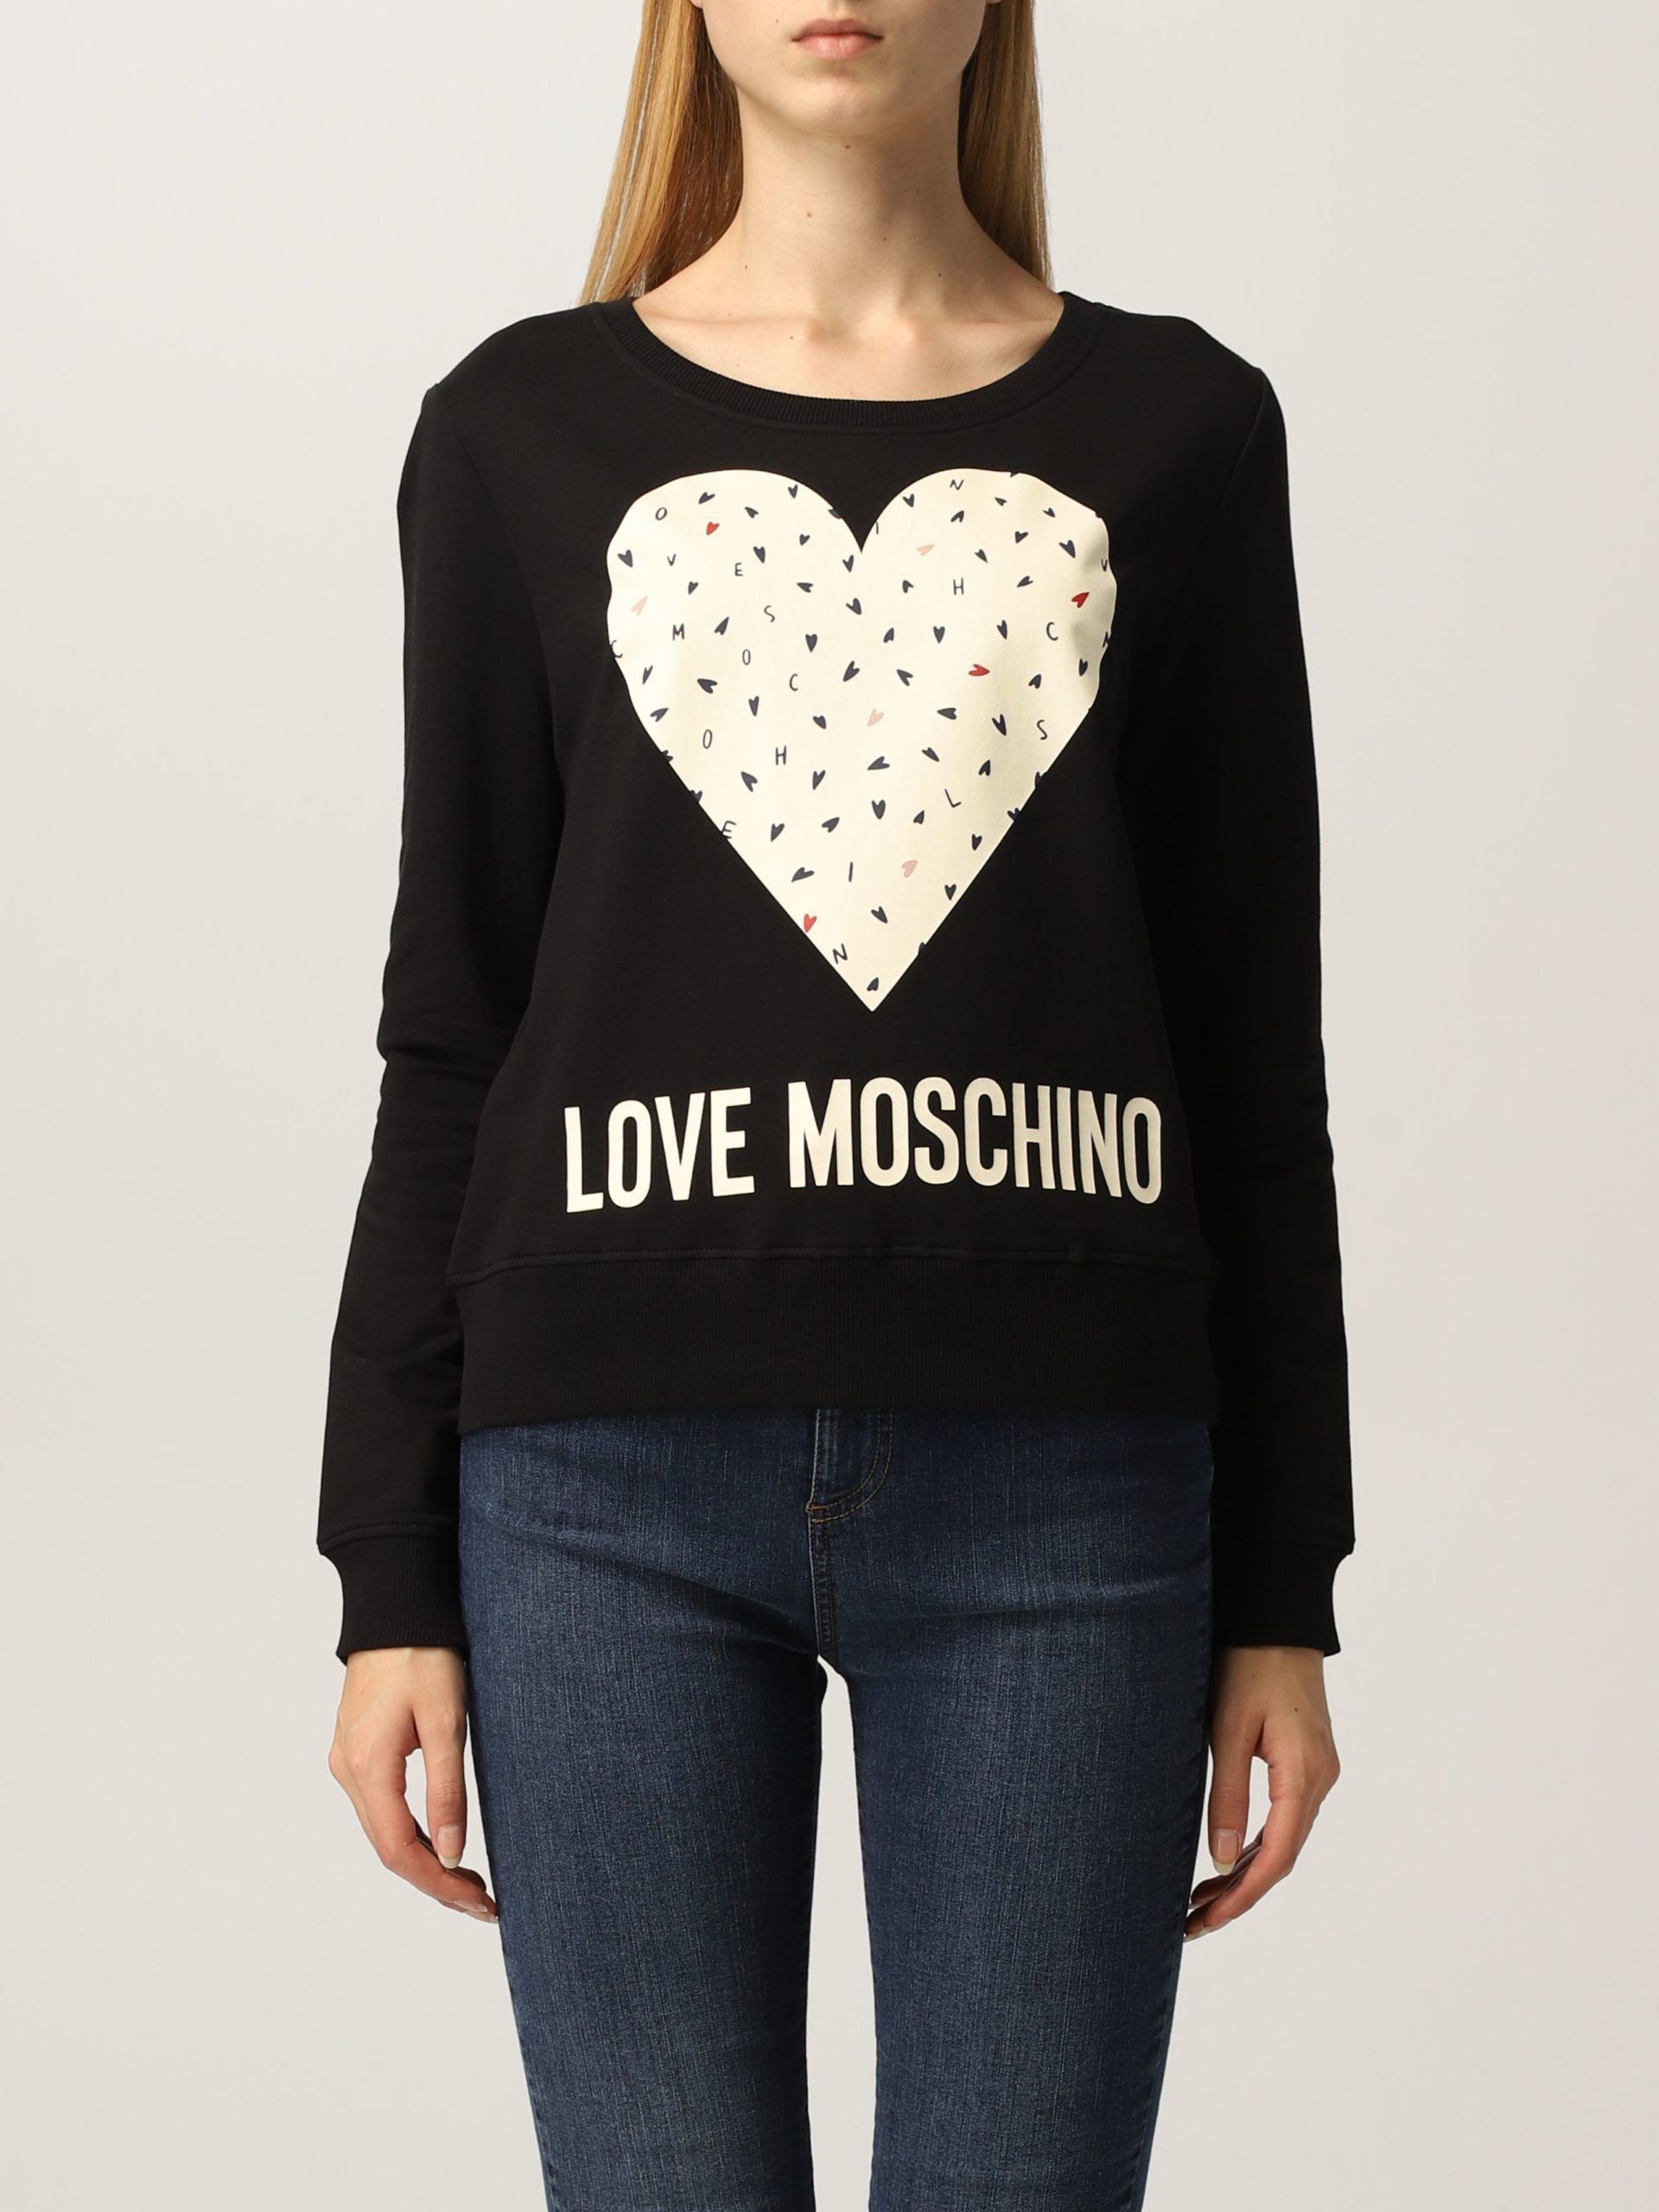 Love Moschino Chic Printed Crewneck Cotton Sweatshirt